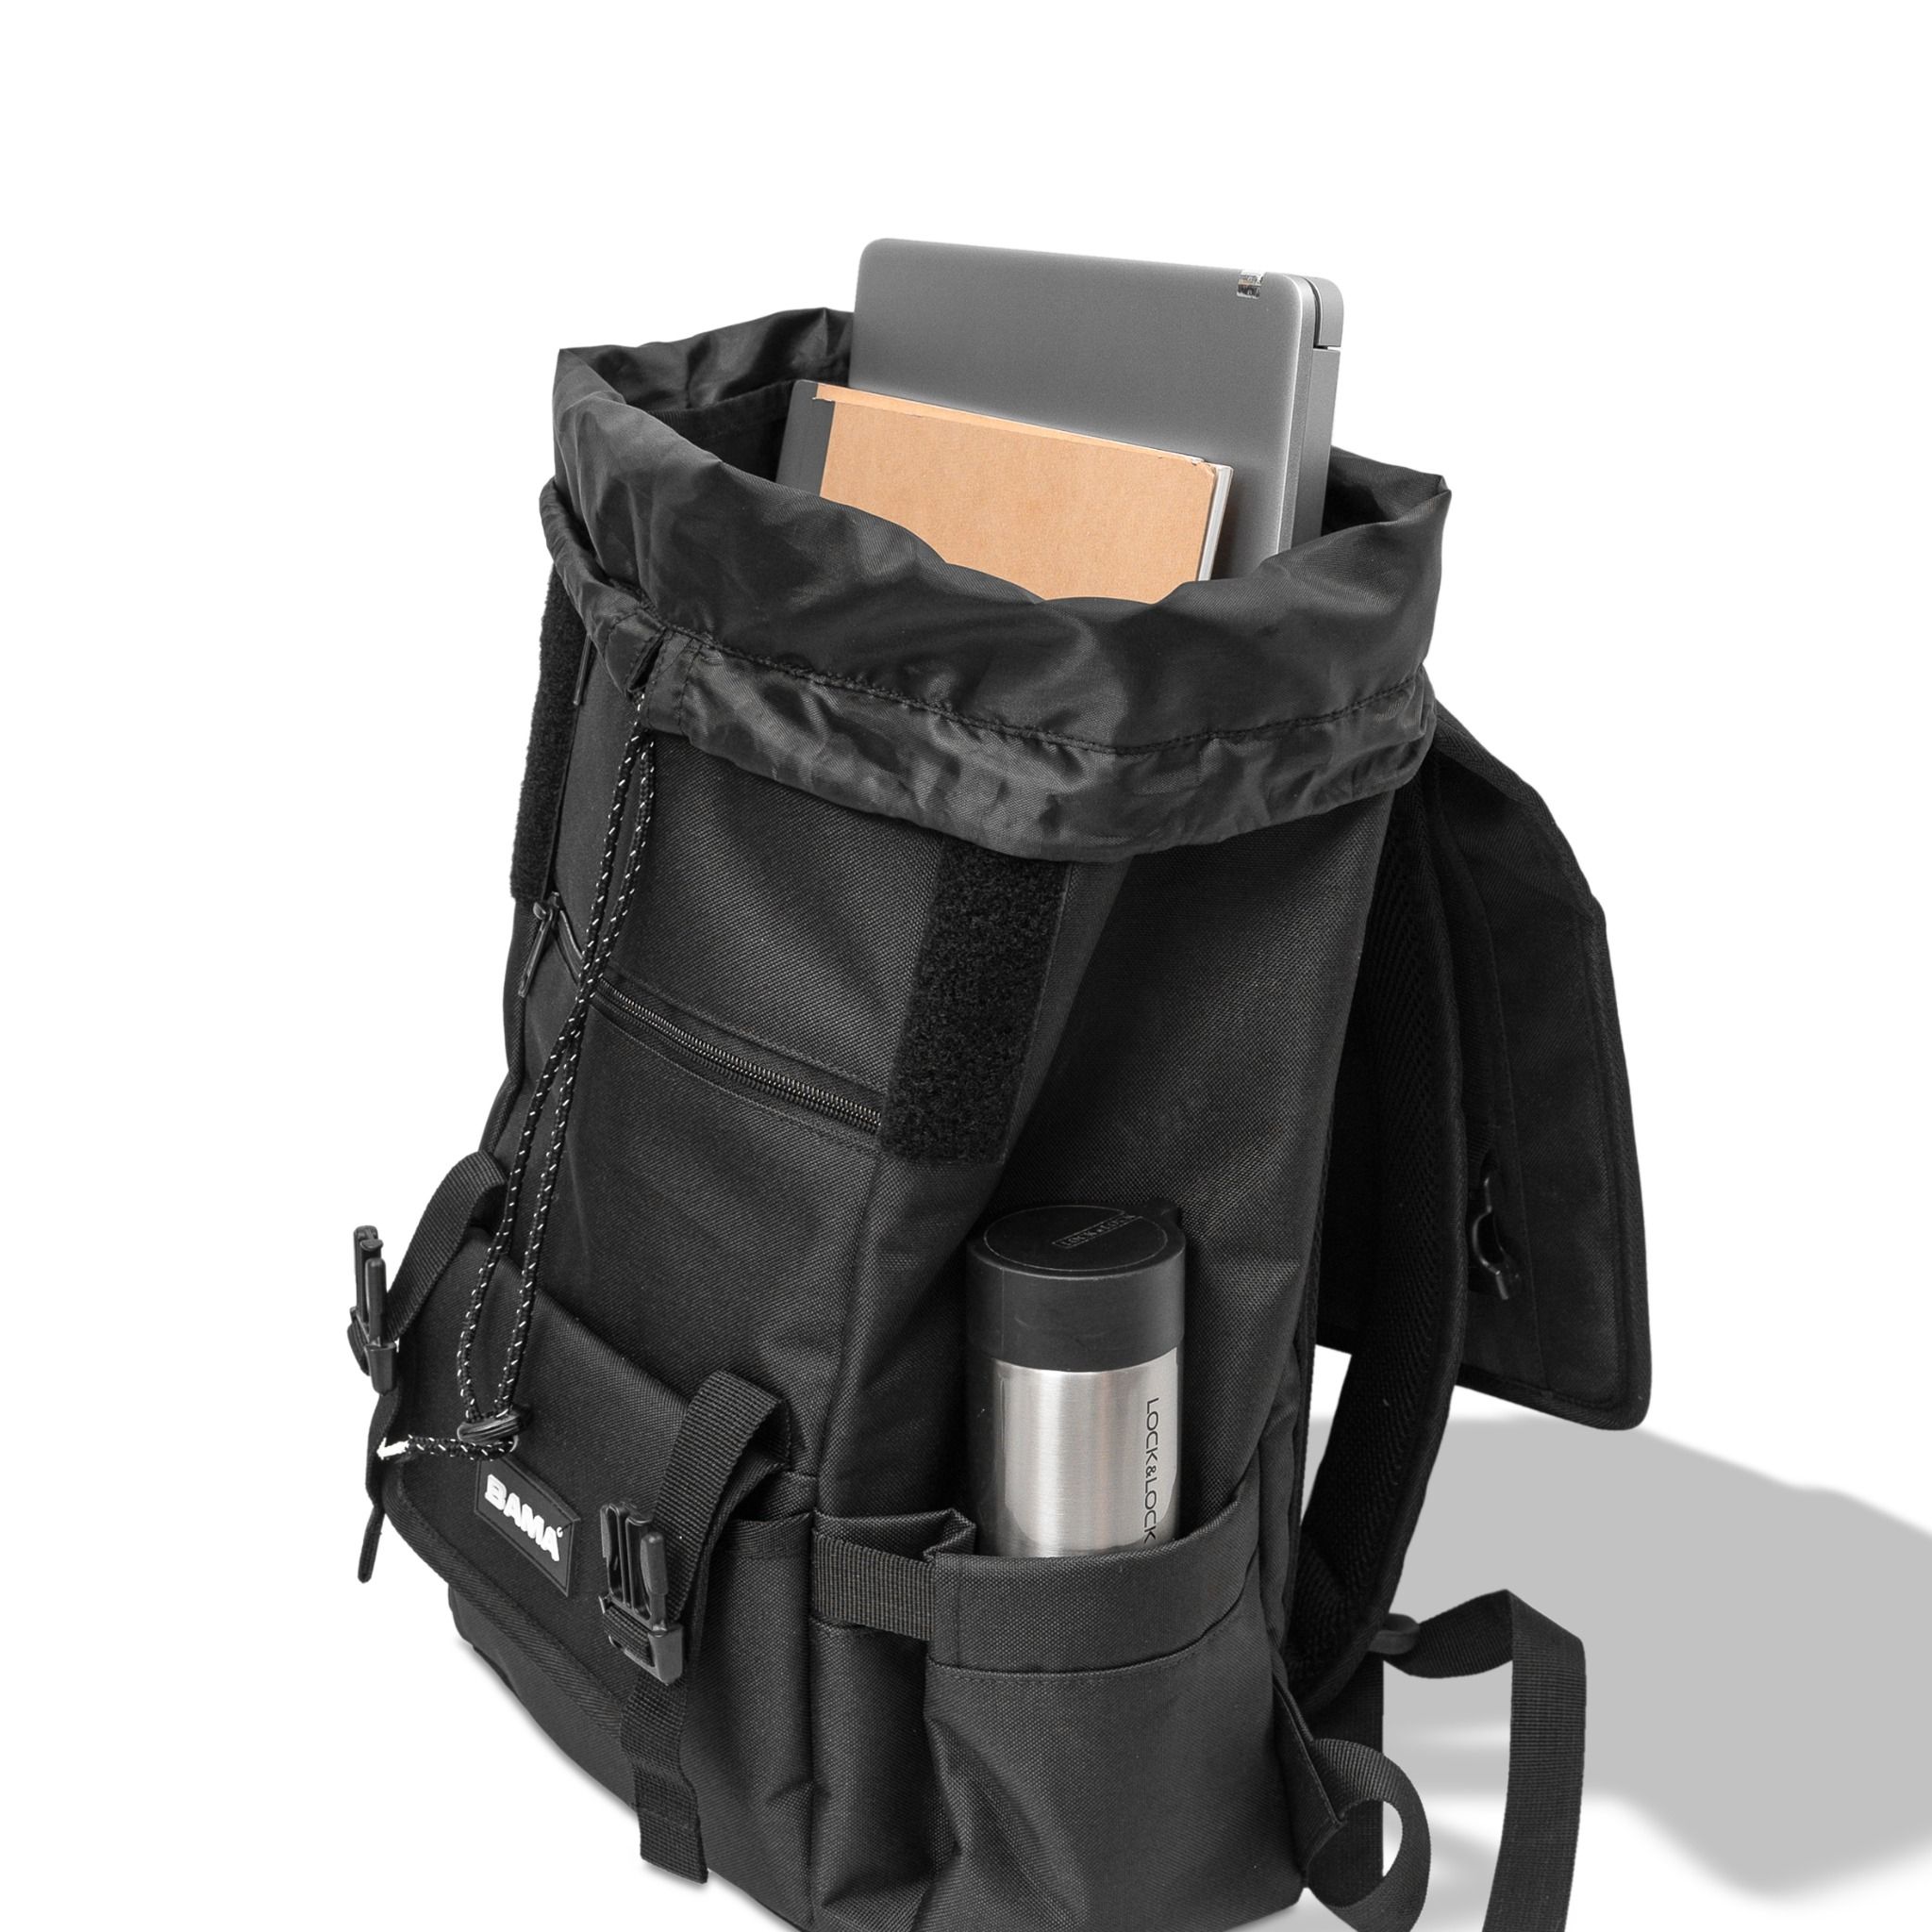  BAMA Urban Backpack - 4 COLORS 